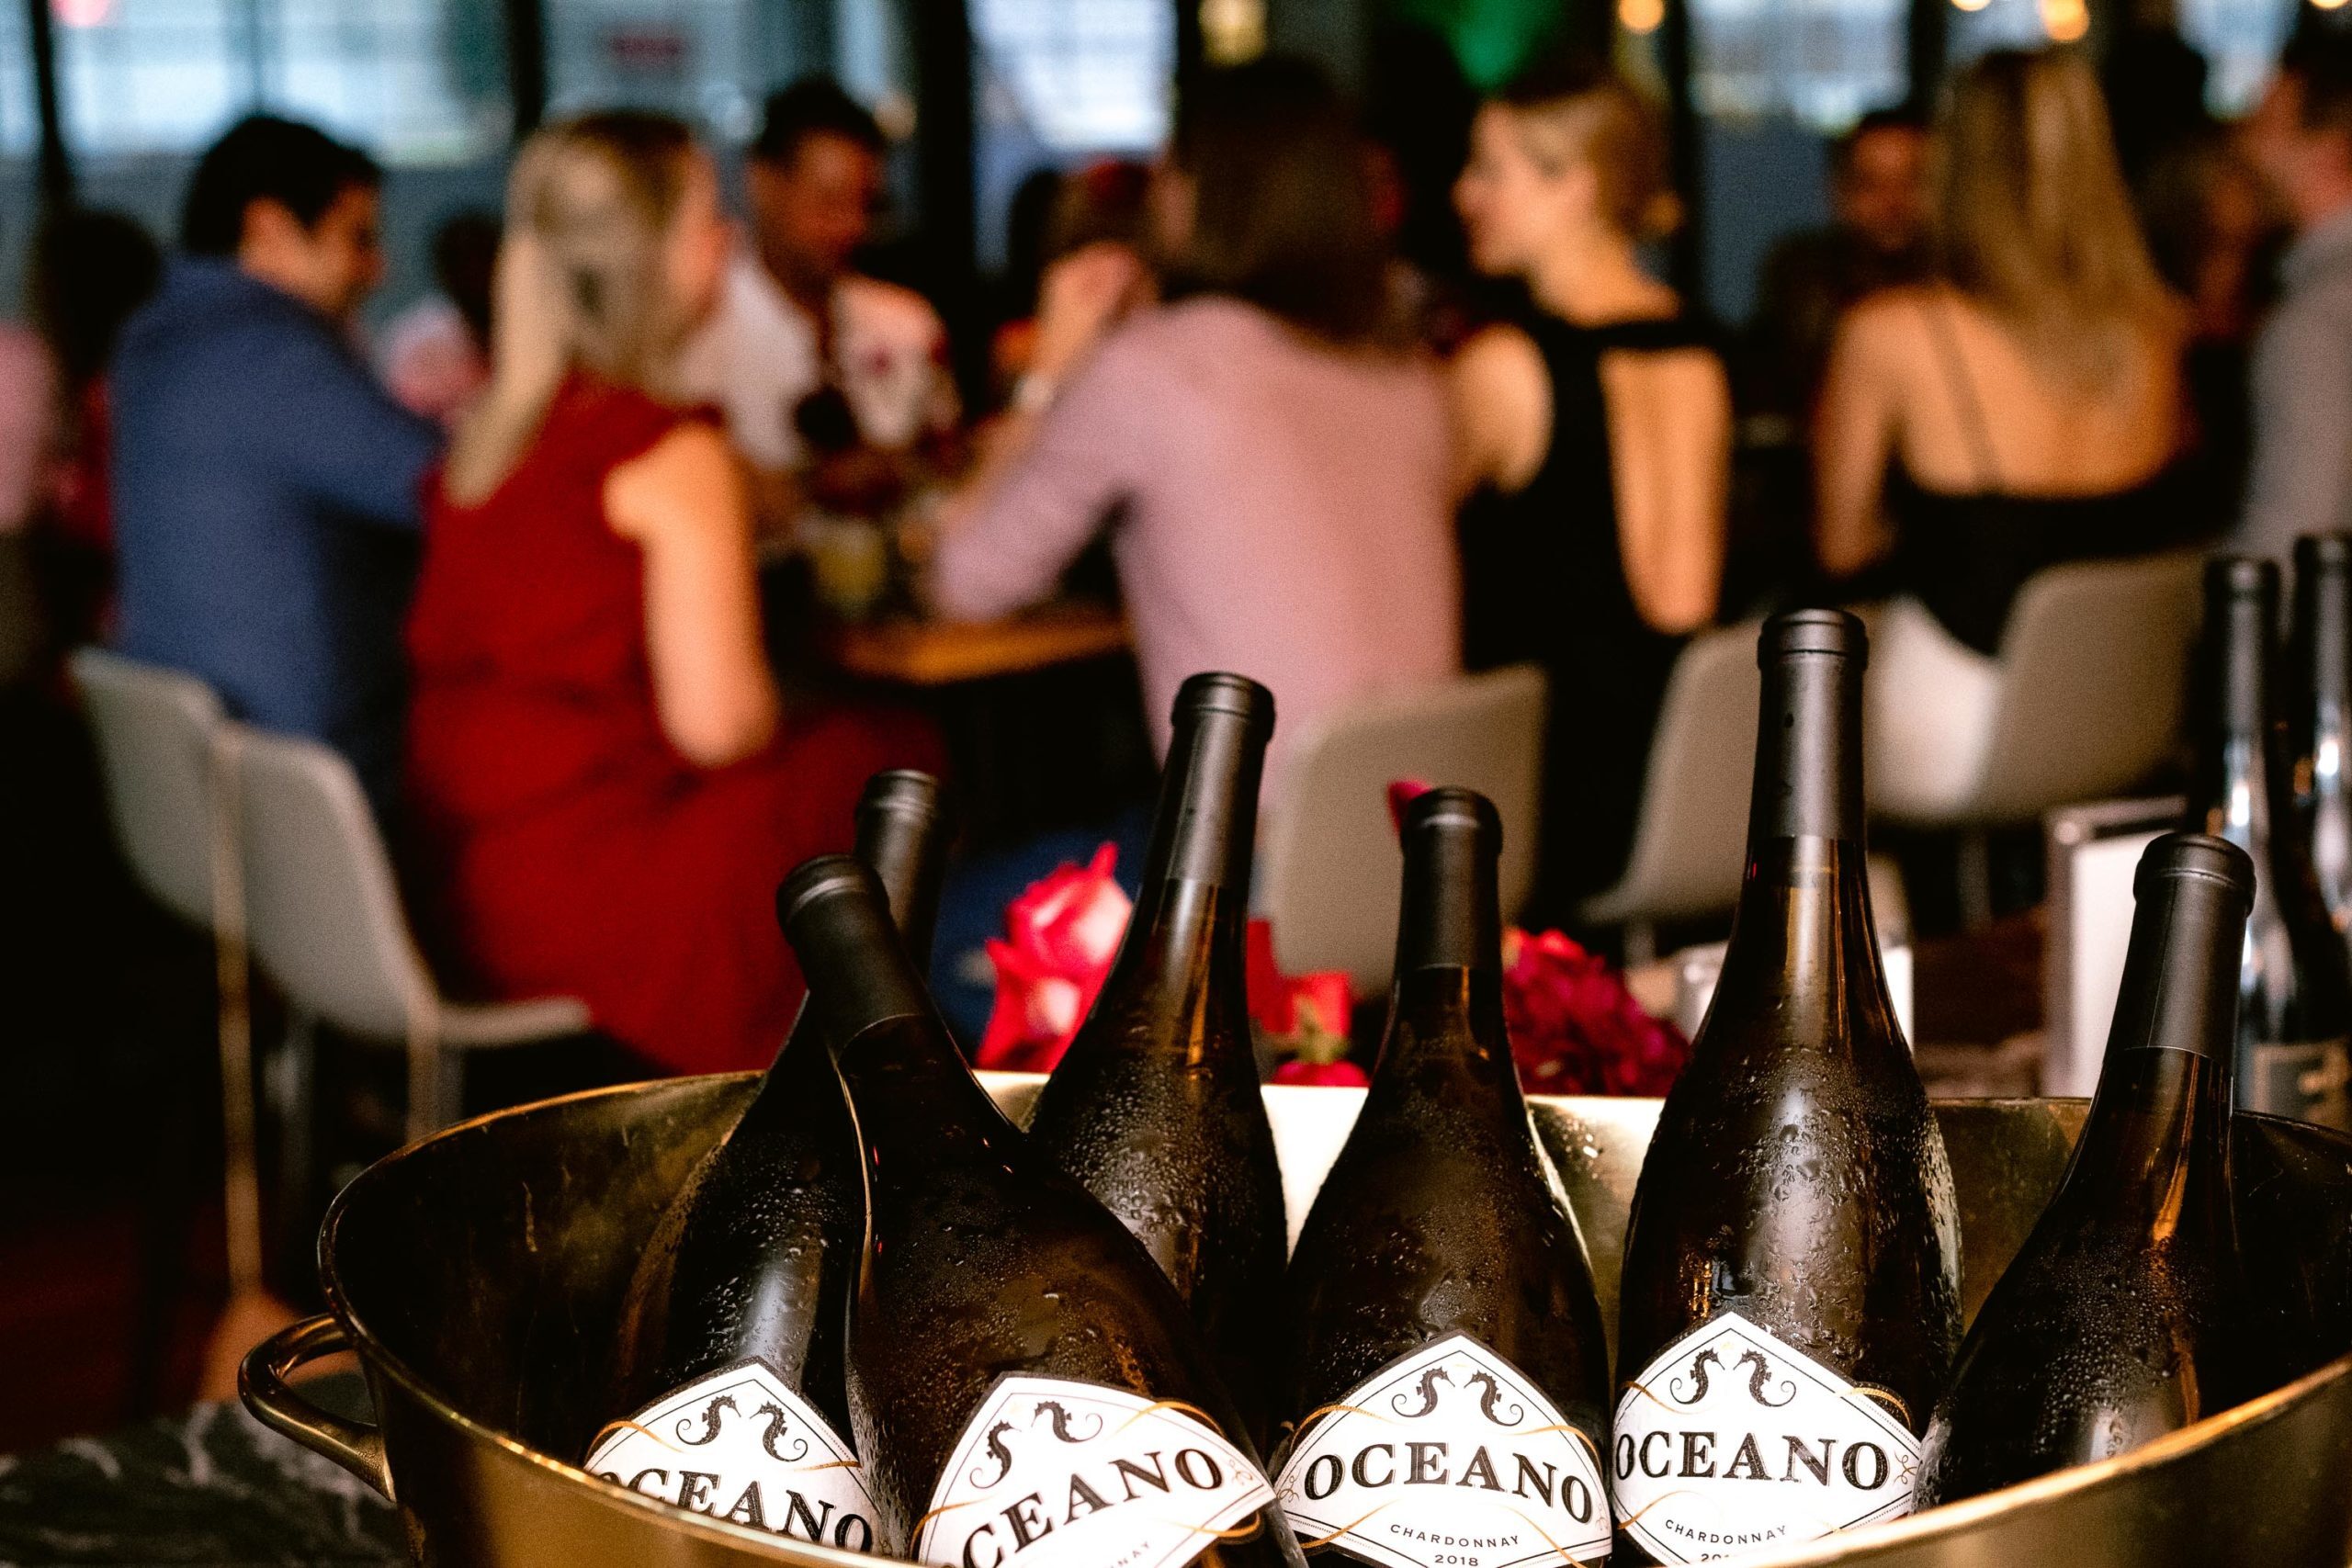 bucket of Oceano wine bottles with dinner party in background